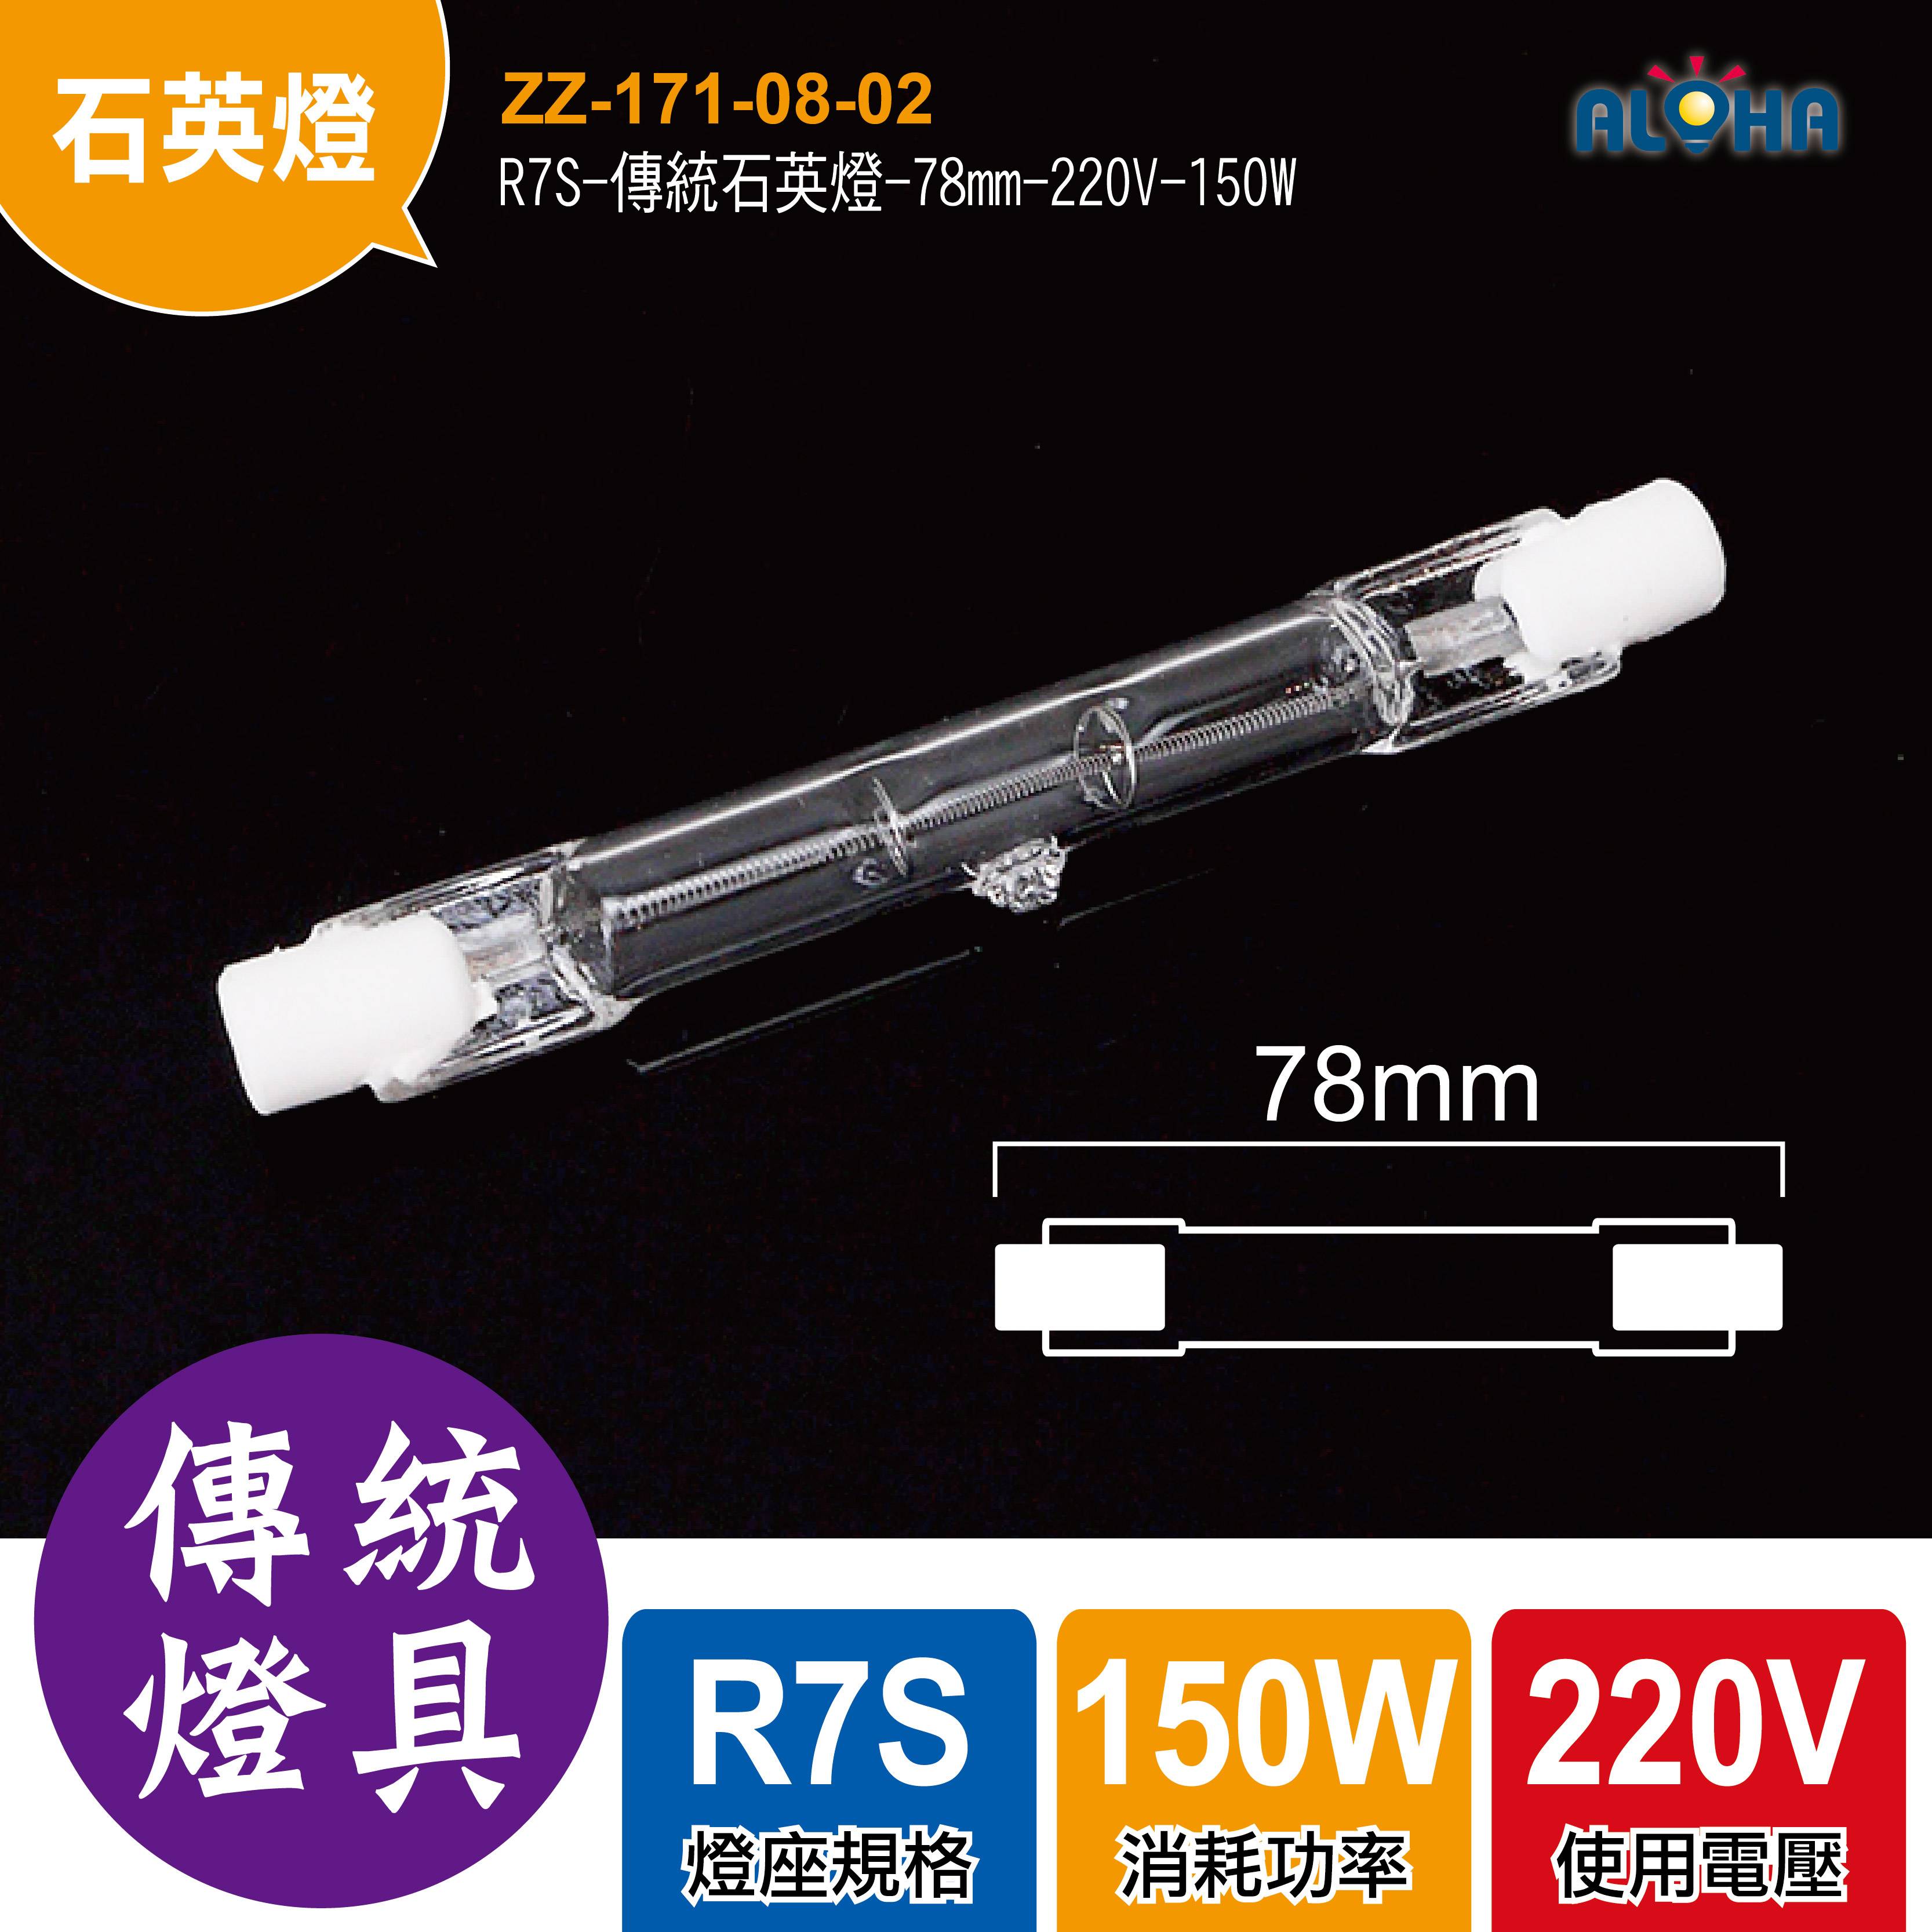 R7S-傳統石英燈-78mm-220V-150W